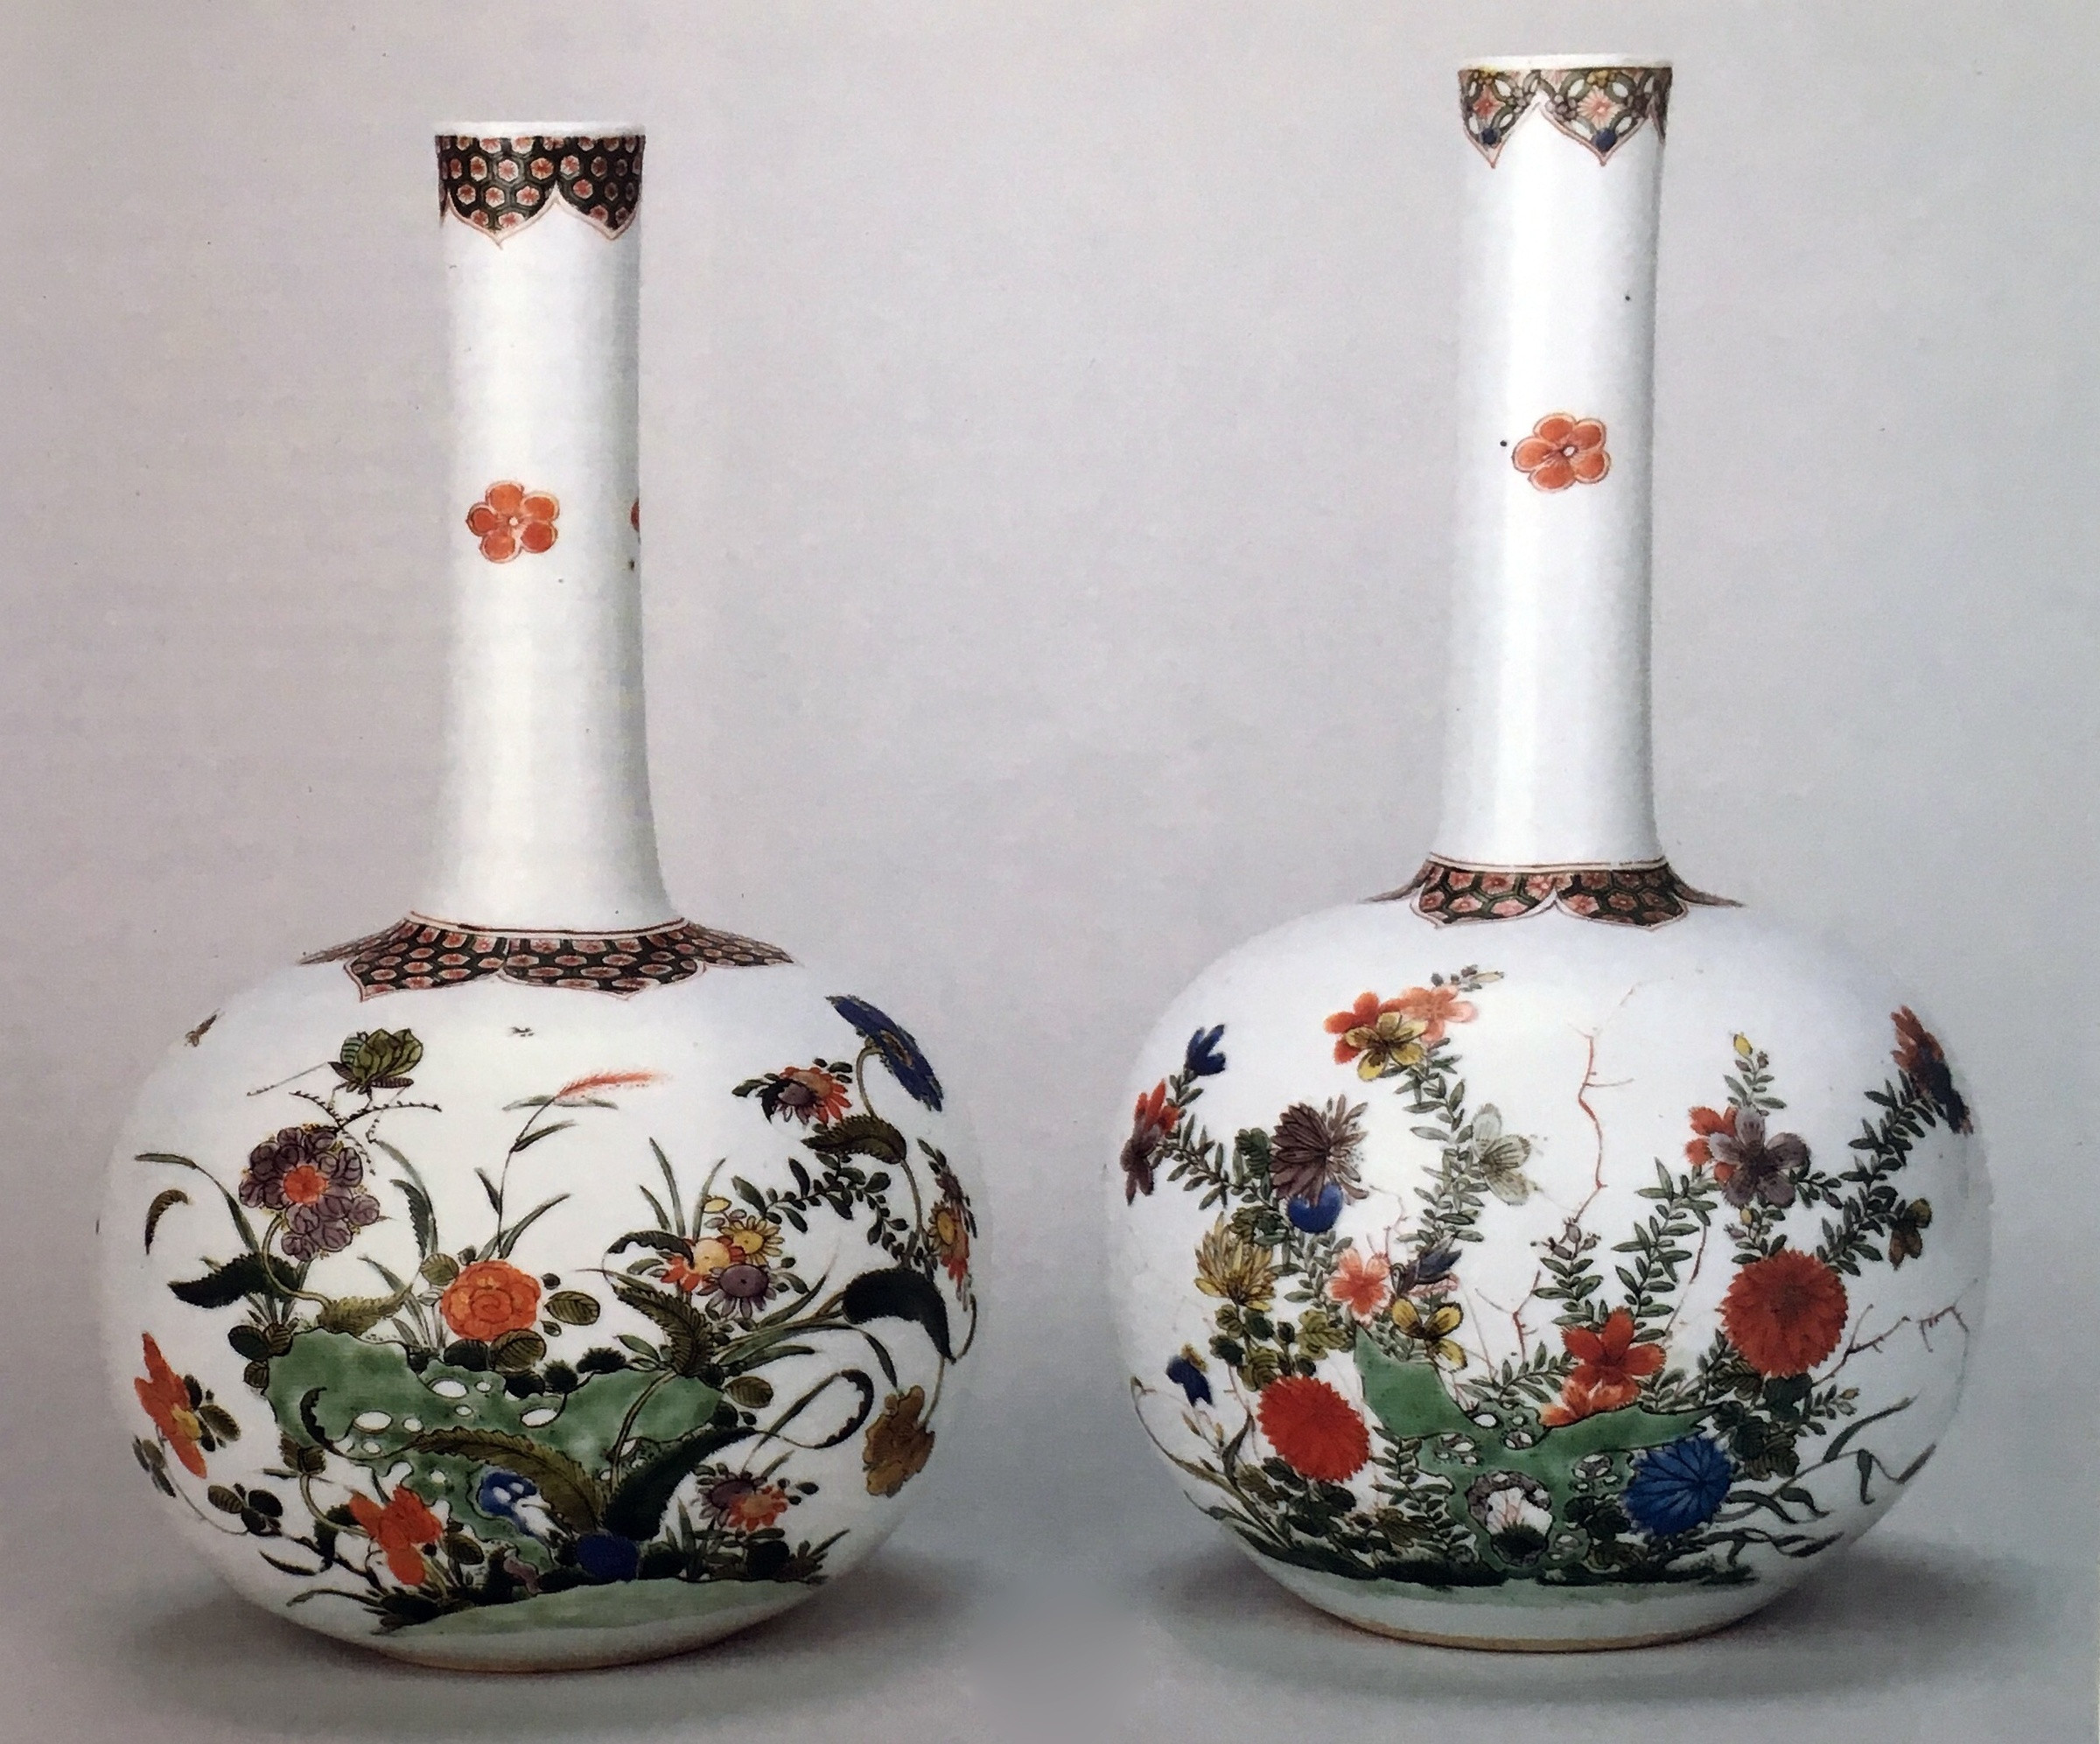 16 Popular Gray Ceramic Vase 2022 free download gray ceramic vase of two rare chinese famille verte bottle vases kangxi 1662 1722 in two rare chinese famille verte bottle vases kangxi 1662 1722